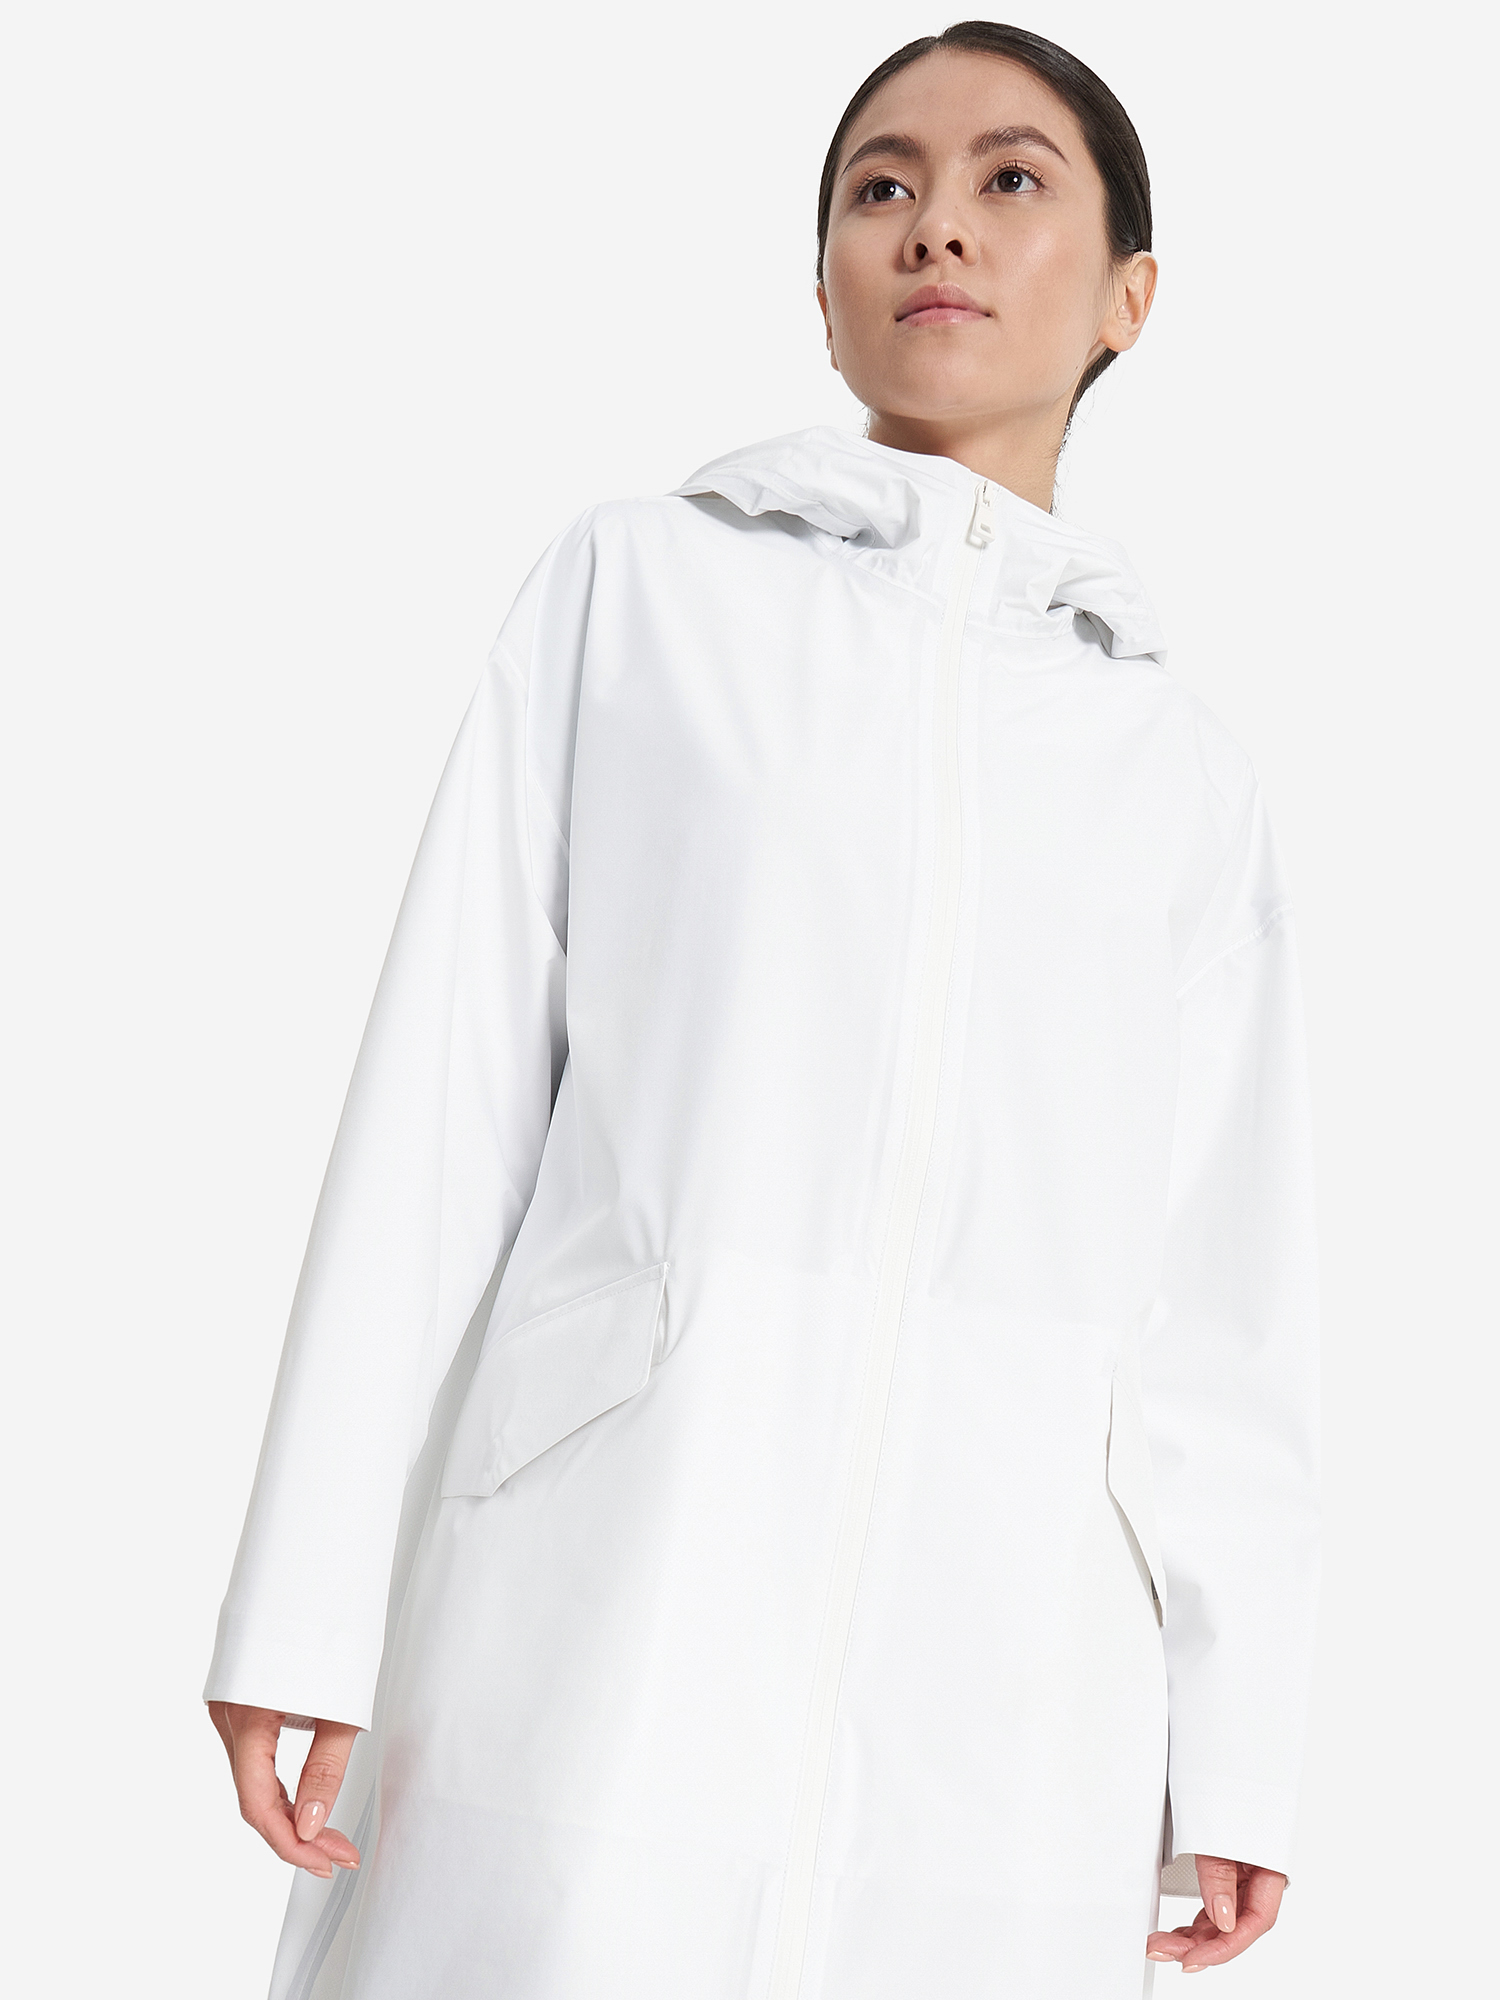 Куртка мембранная женская Geox Gendry Abx, Белый